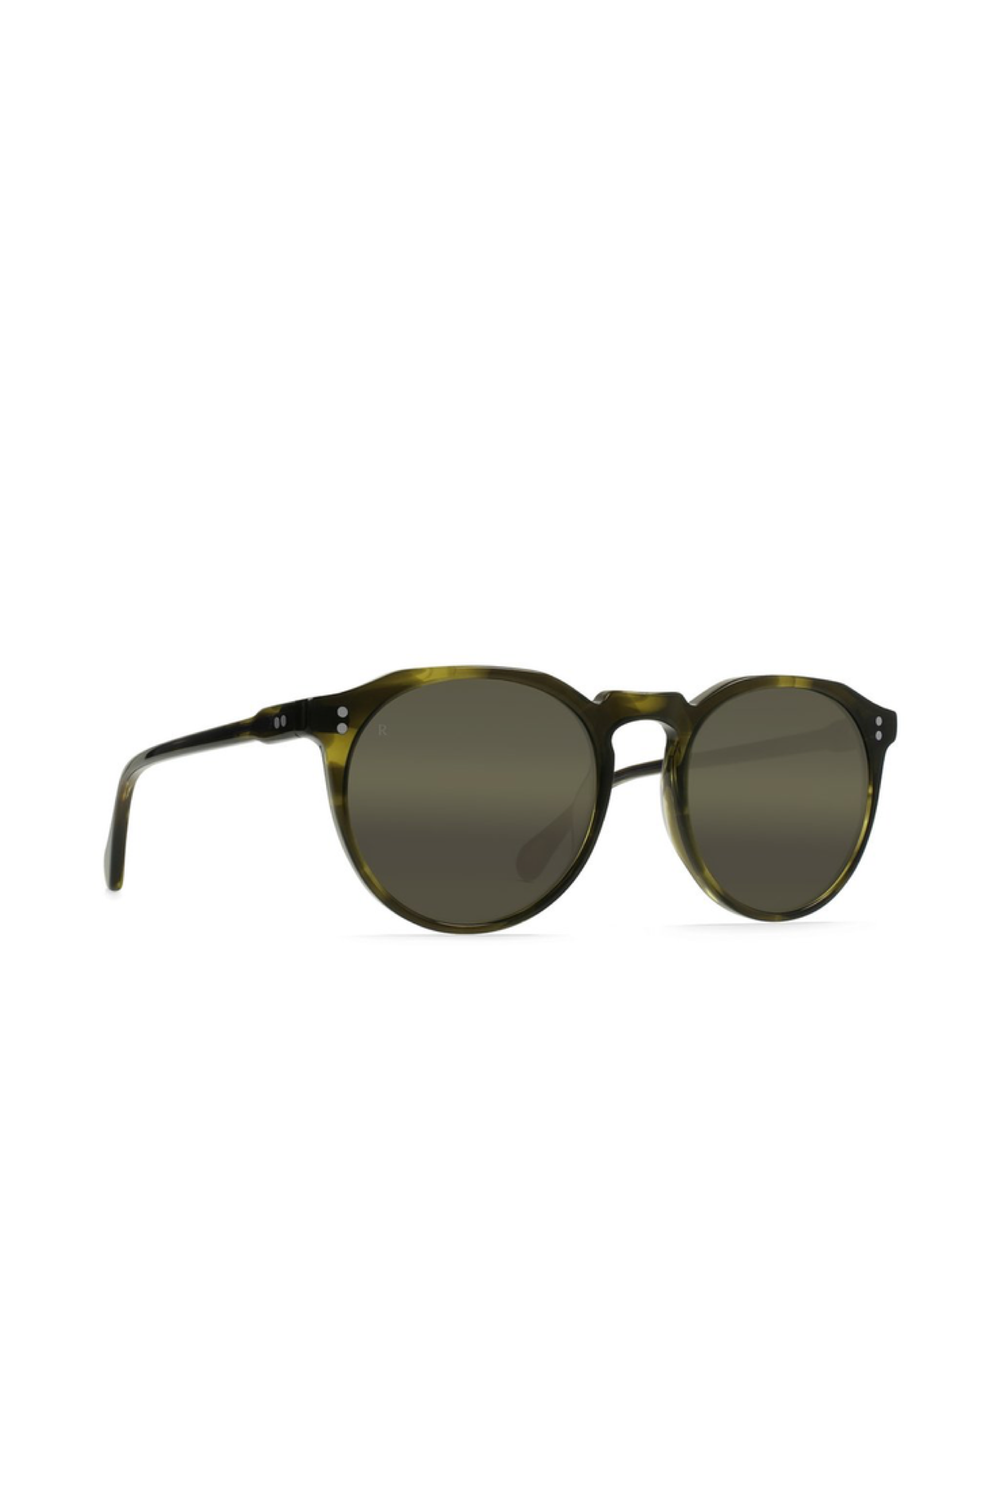 Seagrass Remmy Sunglasses